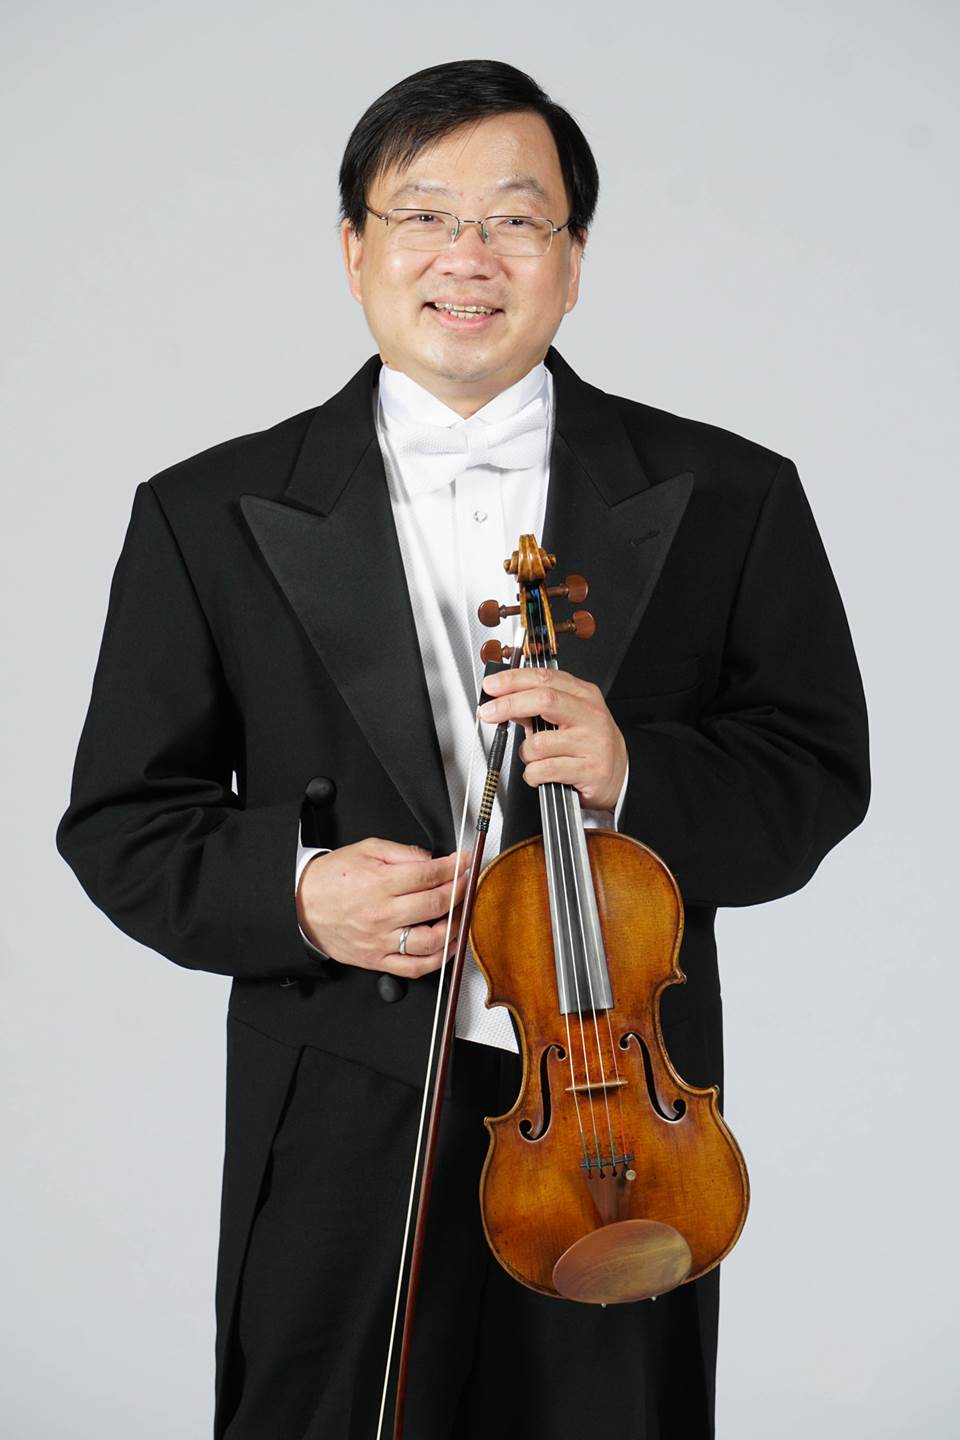 Michael Shih, Concertmaster